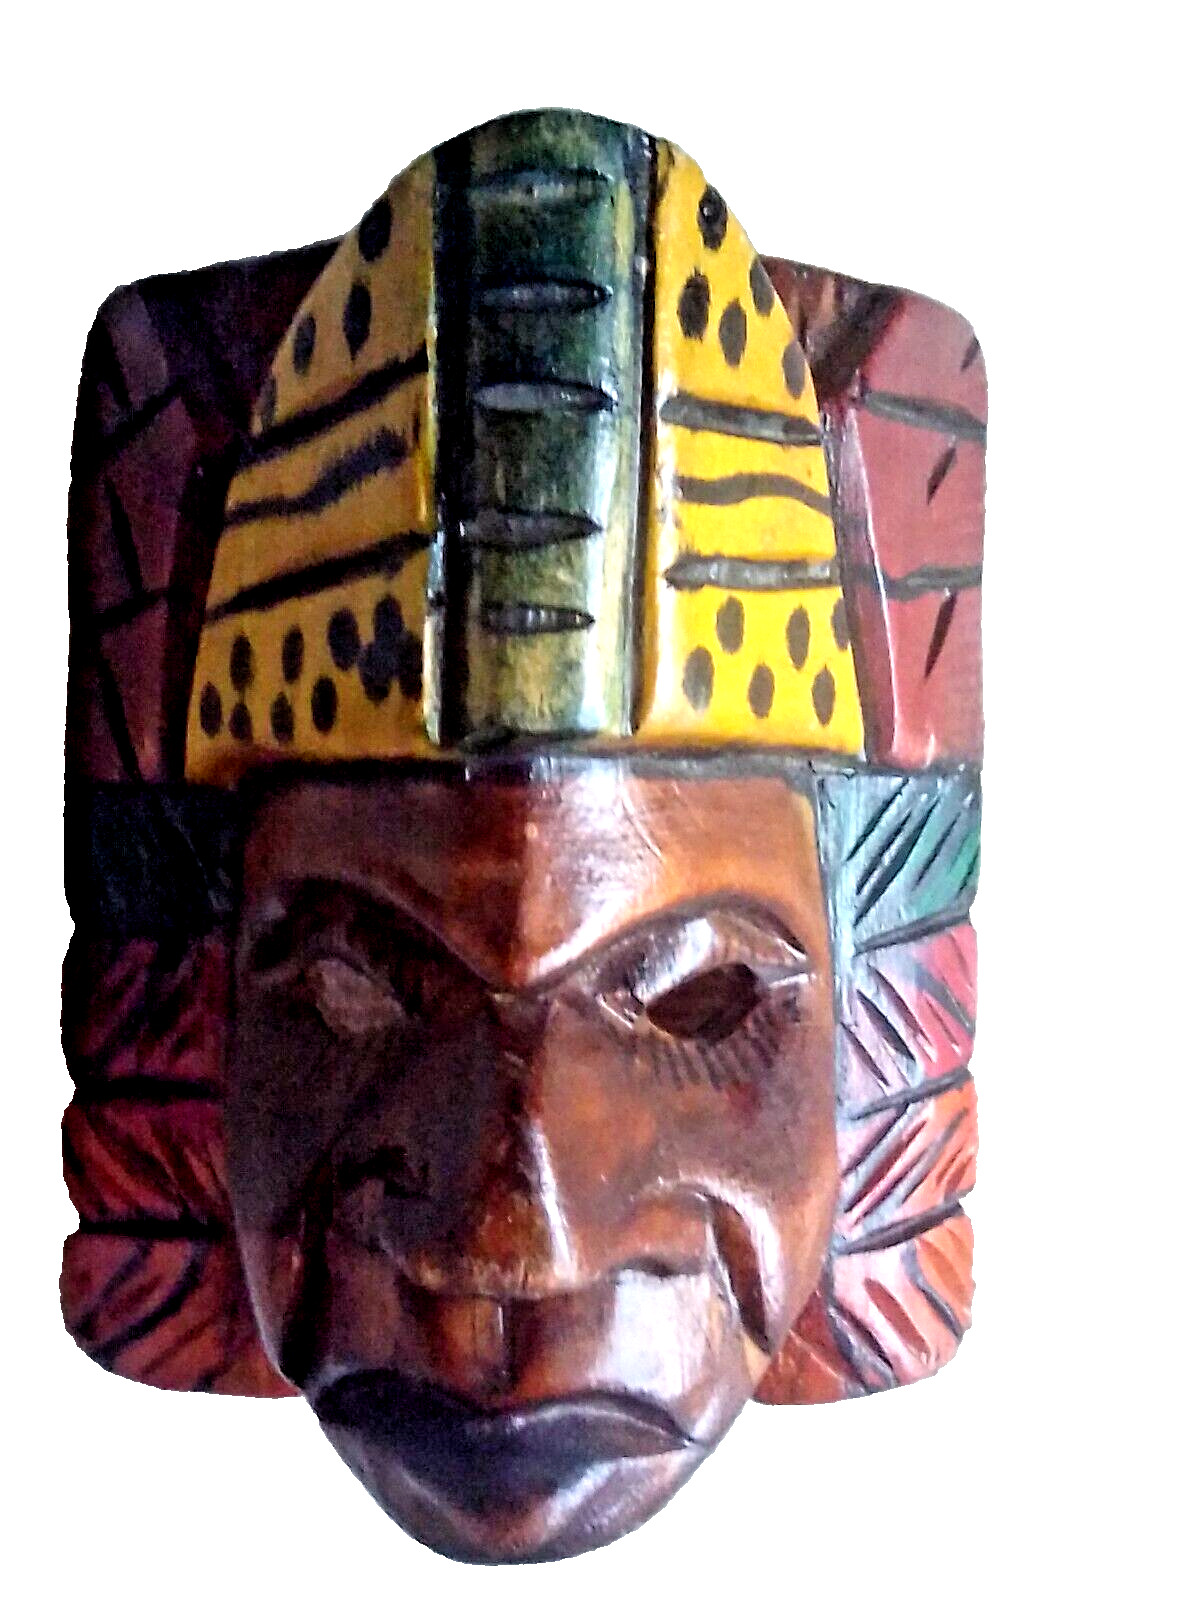 Mayan Chief Wood Hand Painted Wall Hanging Mask from Guatemala